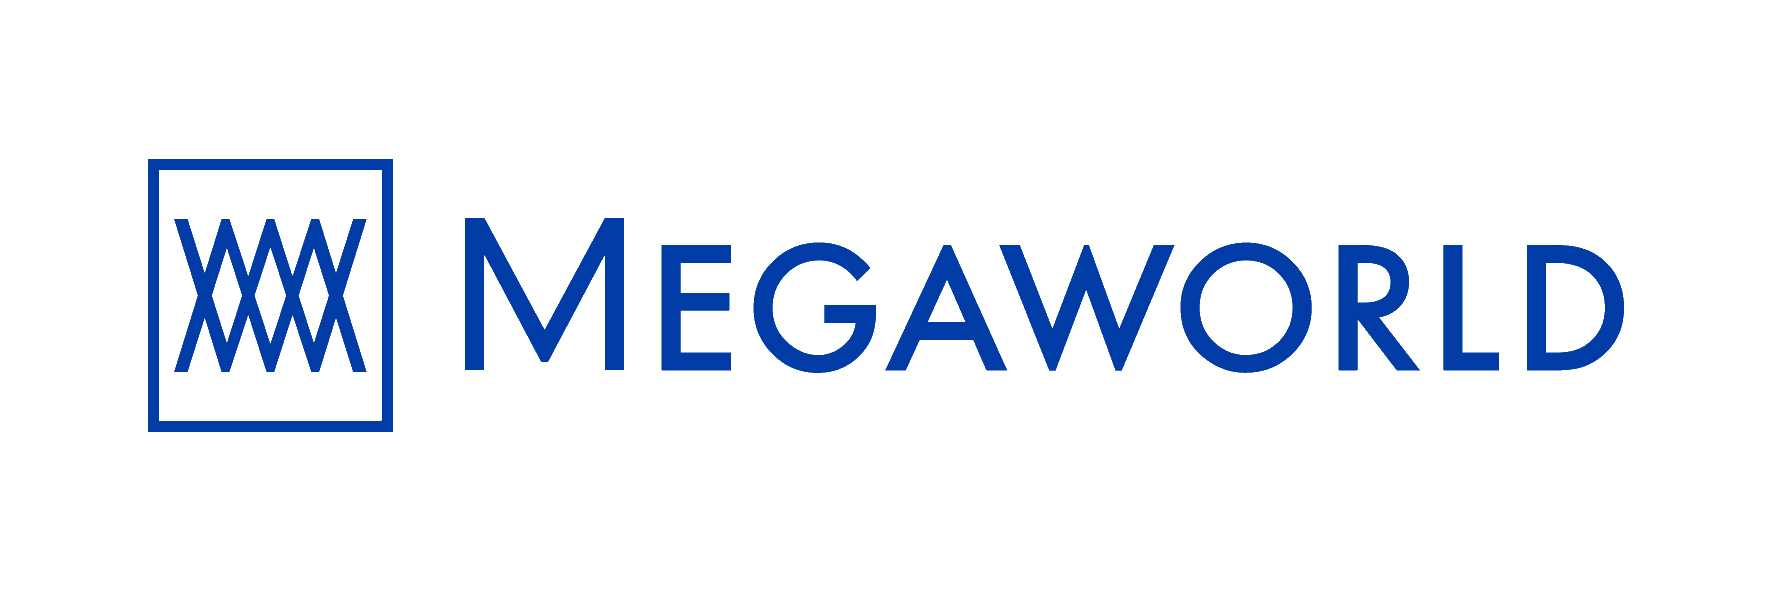 Megaworld Corporation Brand Logo